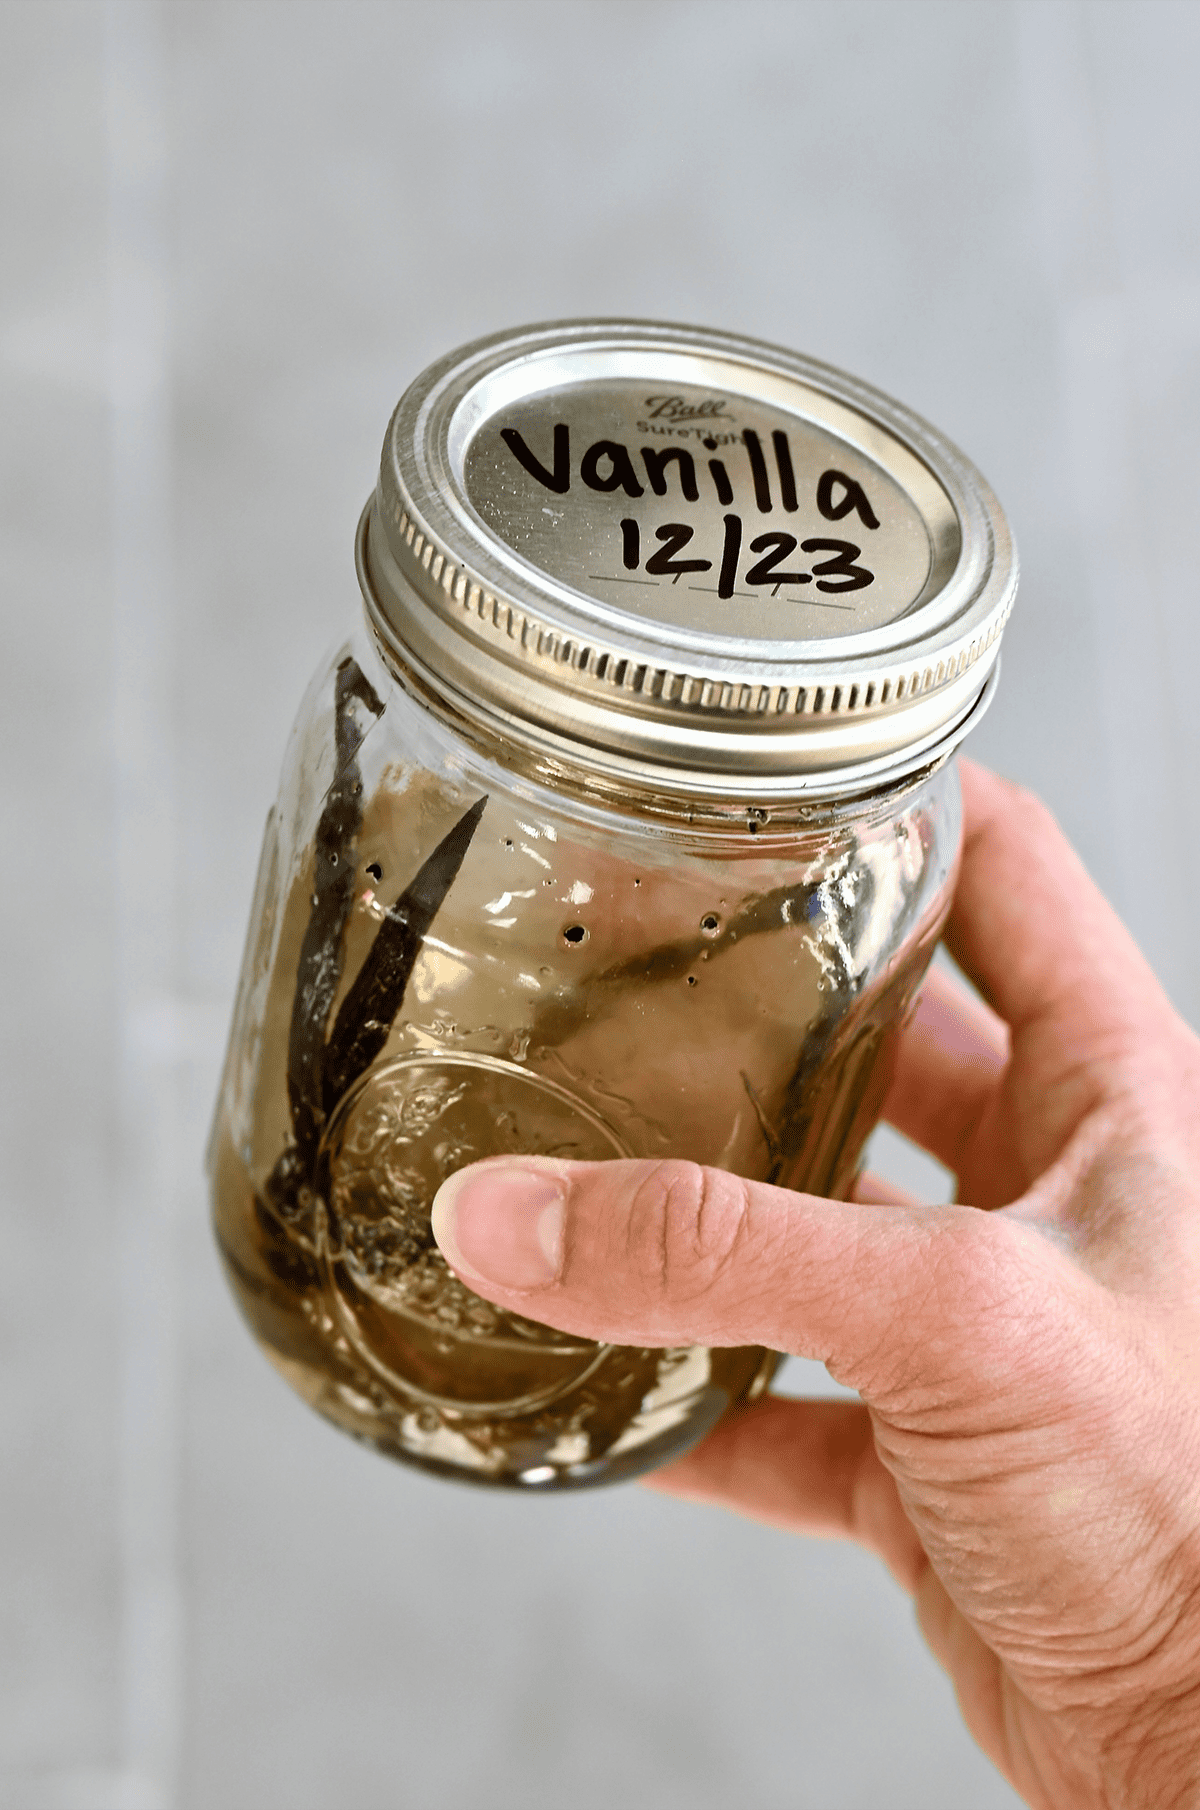 Vanilla bean pods and vodka in a mason jar labeled "Vanilla 12/23."